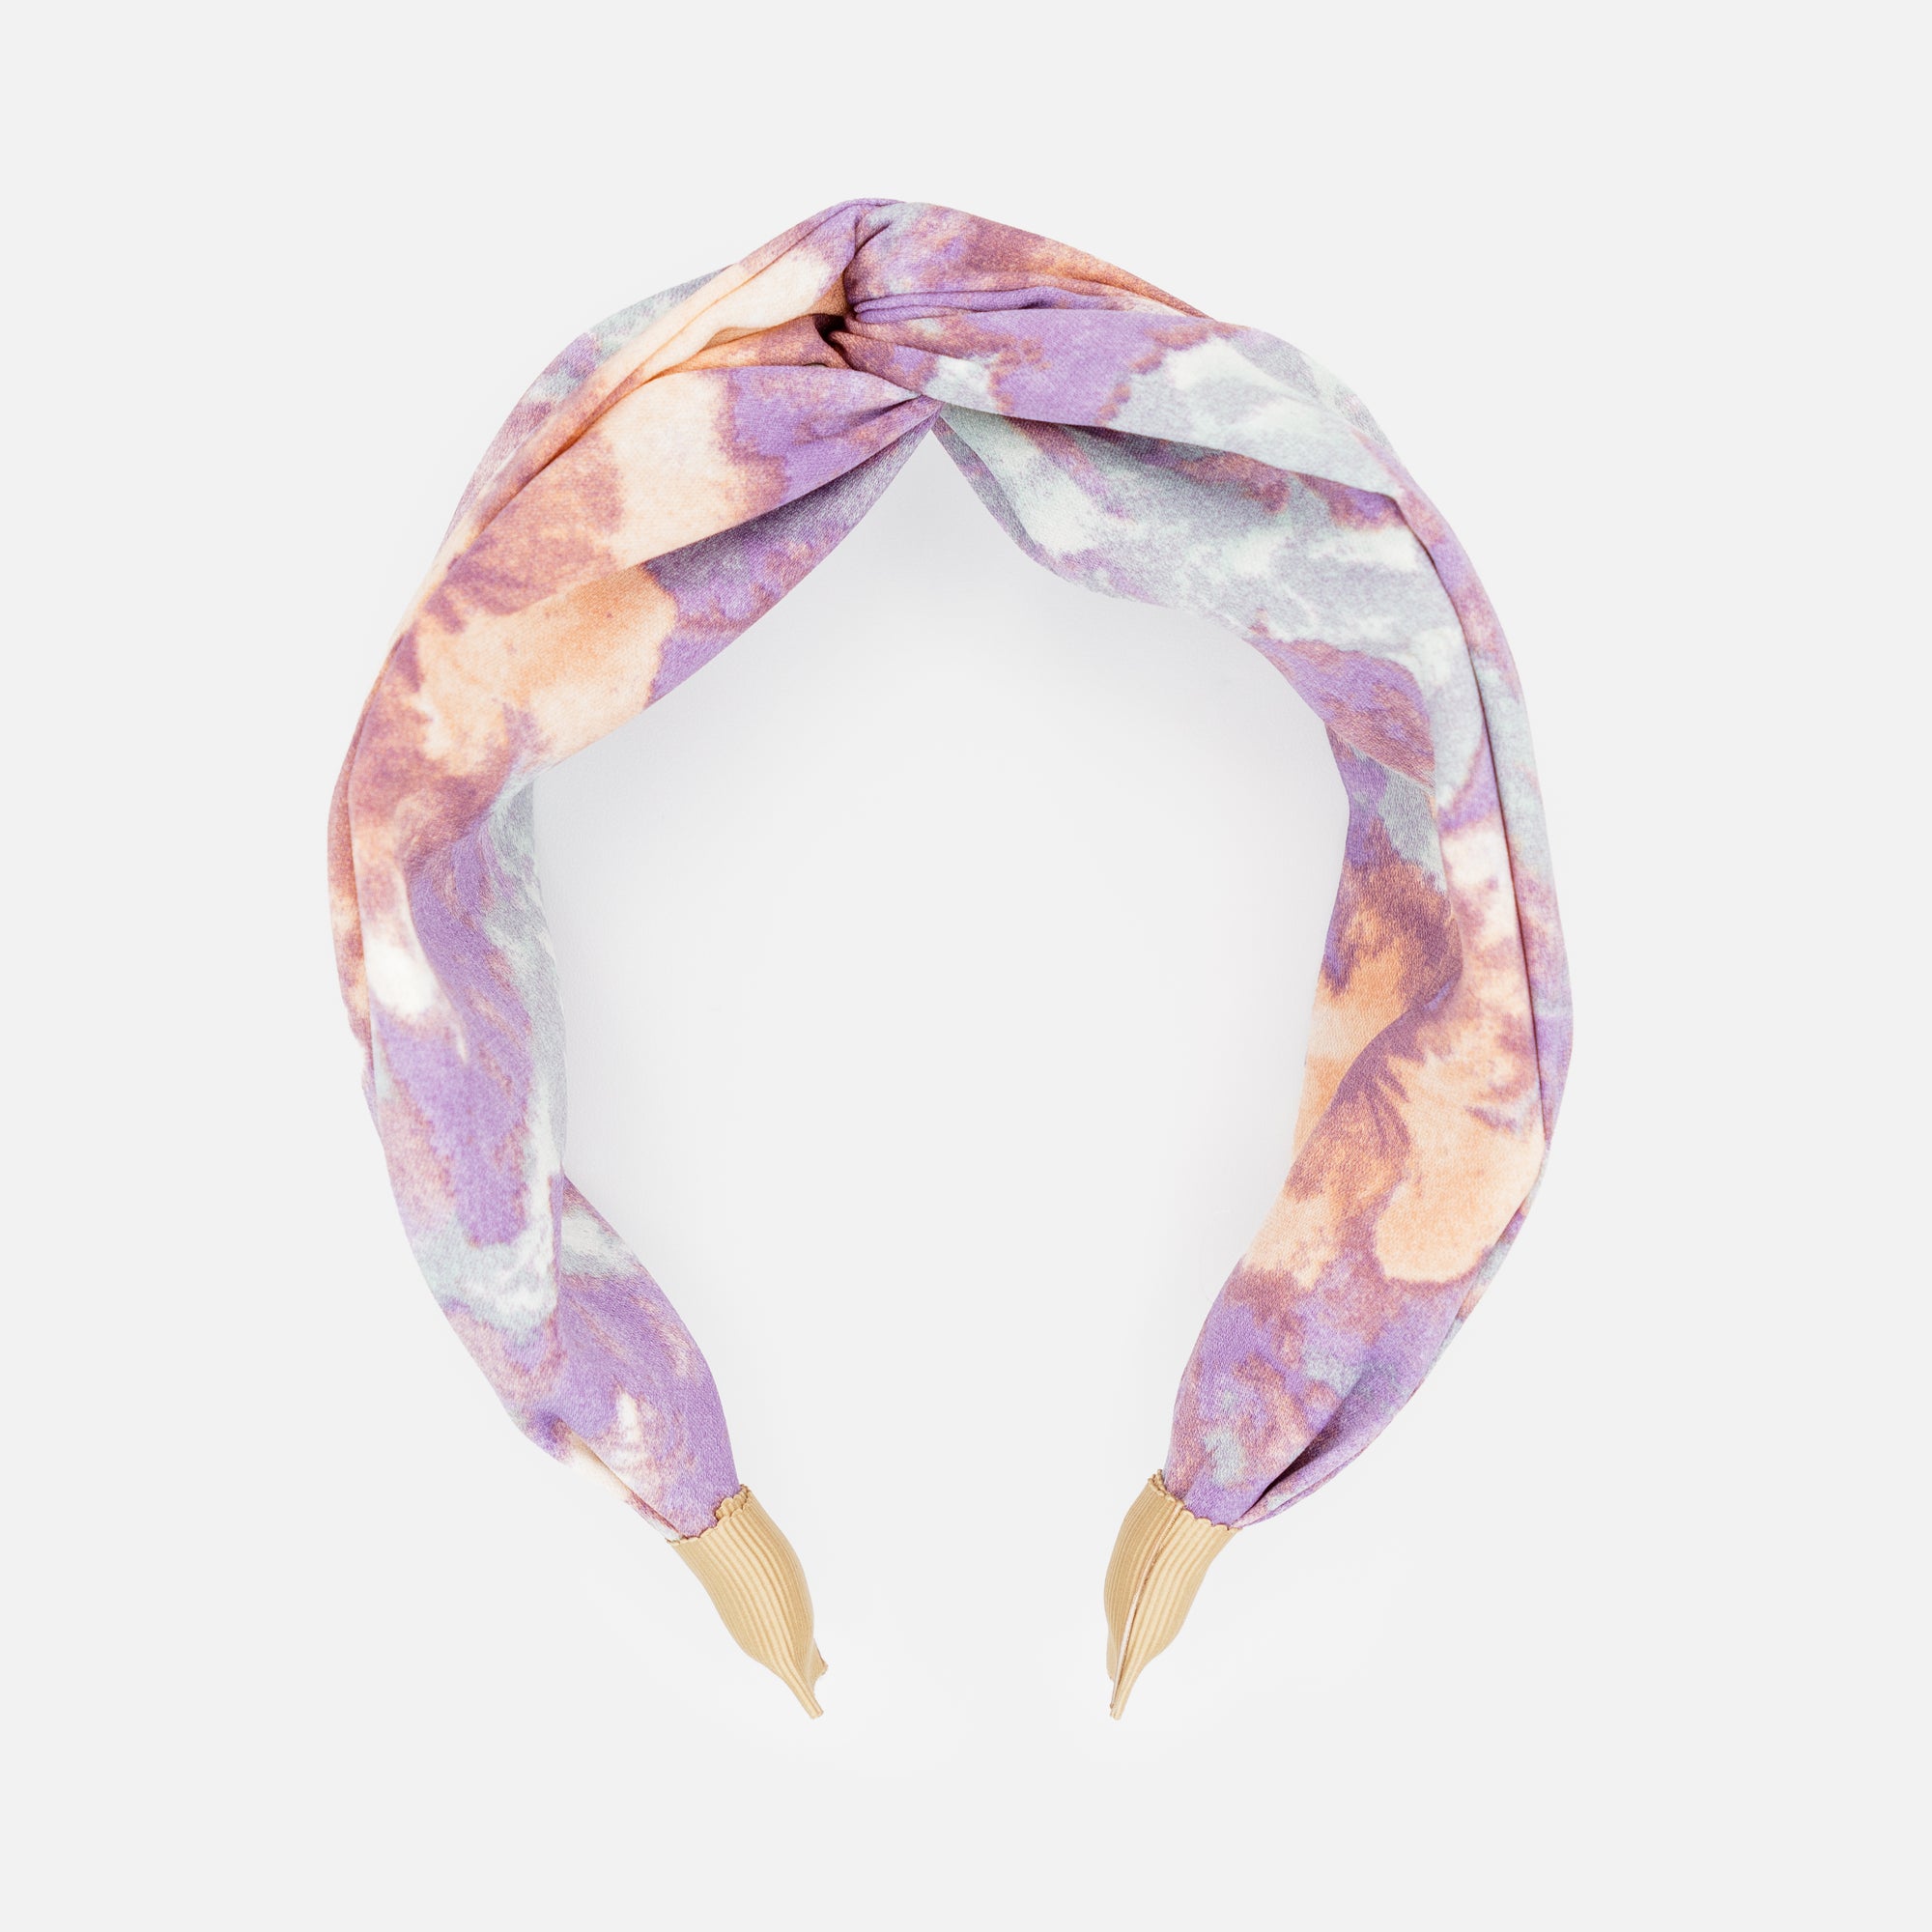 Peach purple and blue headband with bow